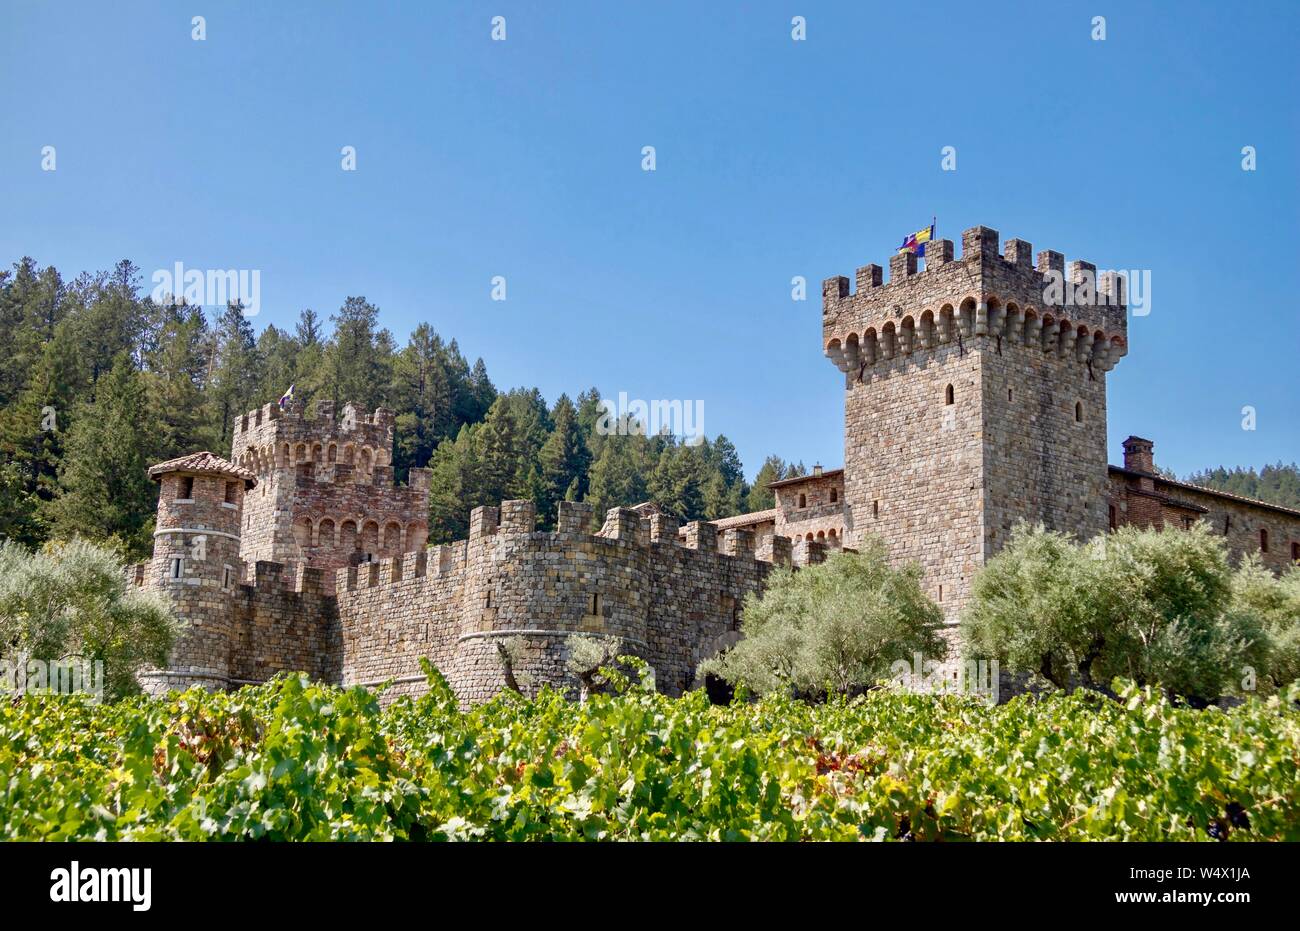 Castello di Amorosa in Calistoga Kalifornien, ein toskanischer inspiriert Winery im Napa Valley Stockfoto